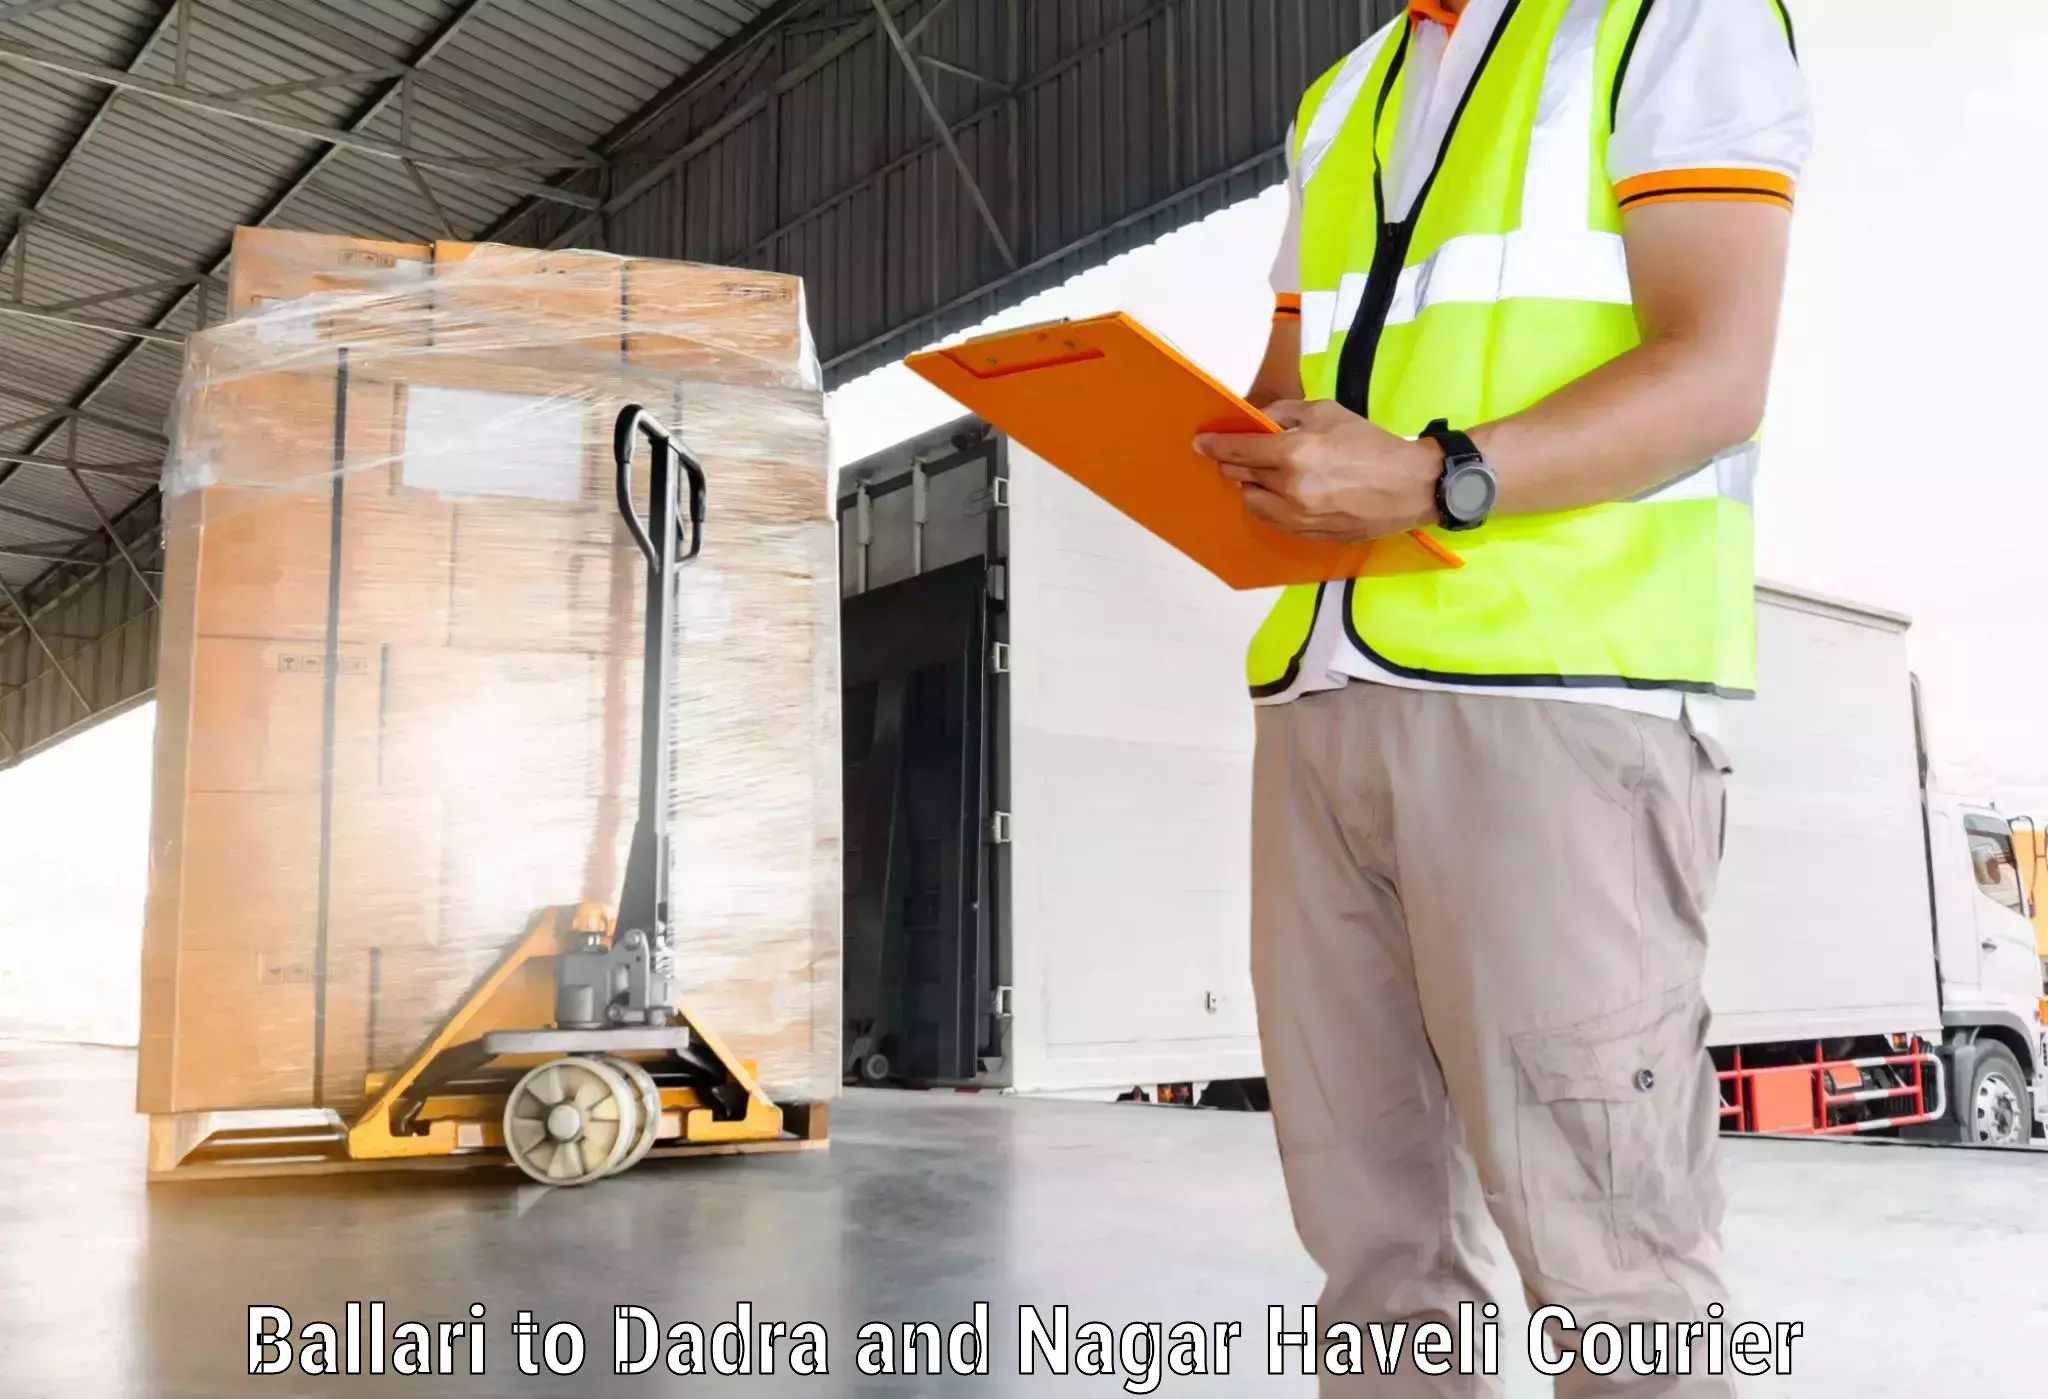 Advanced logistics management Ballari to Silvassa